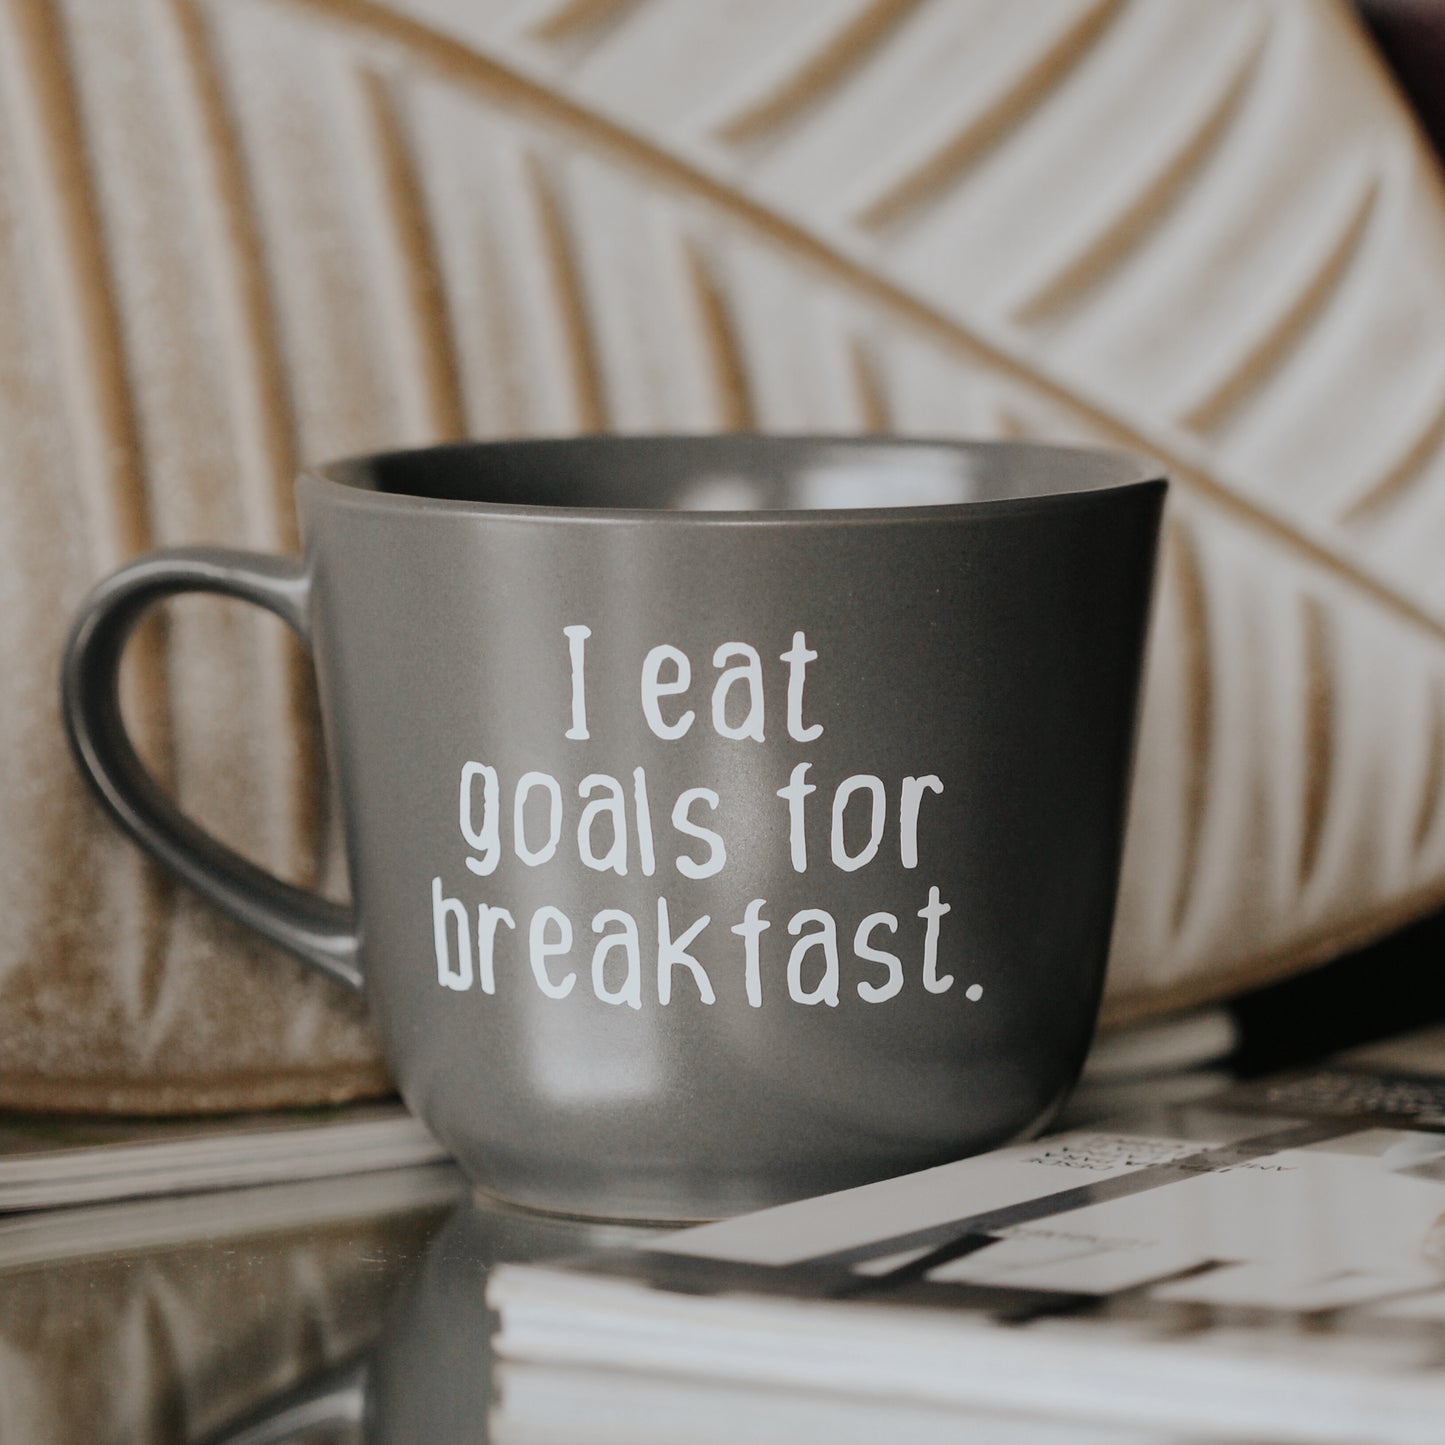 Candle Mug Goals for Breakfast